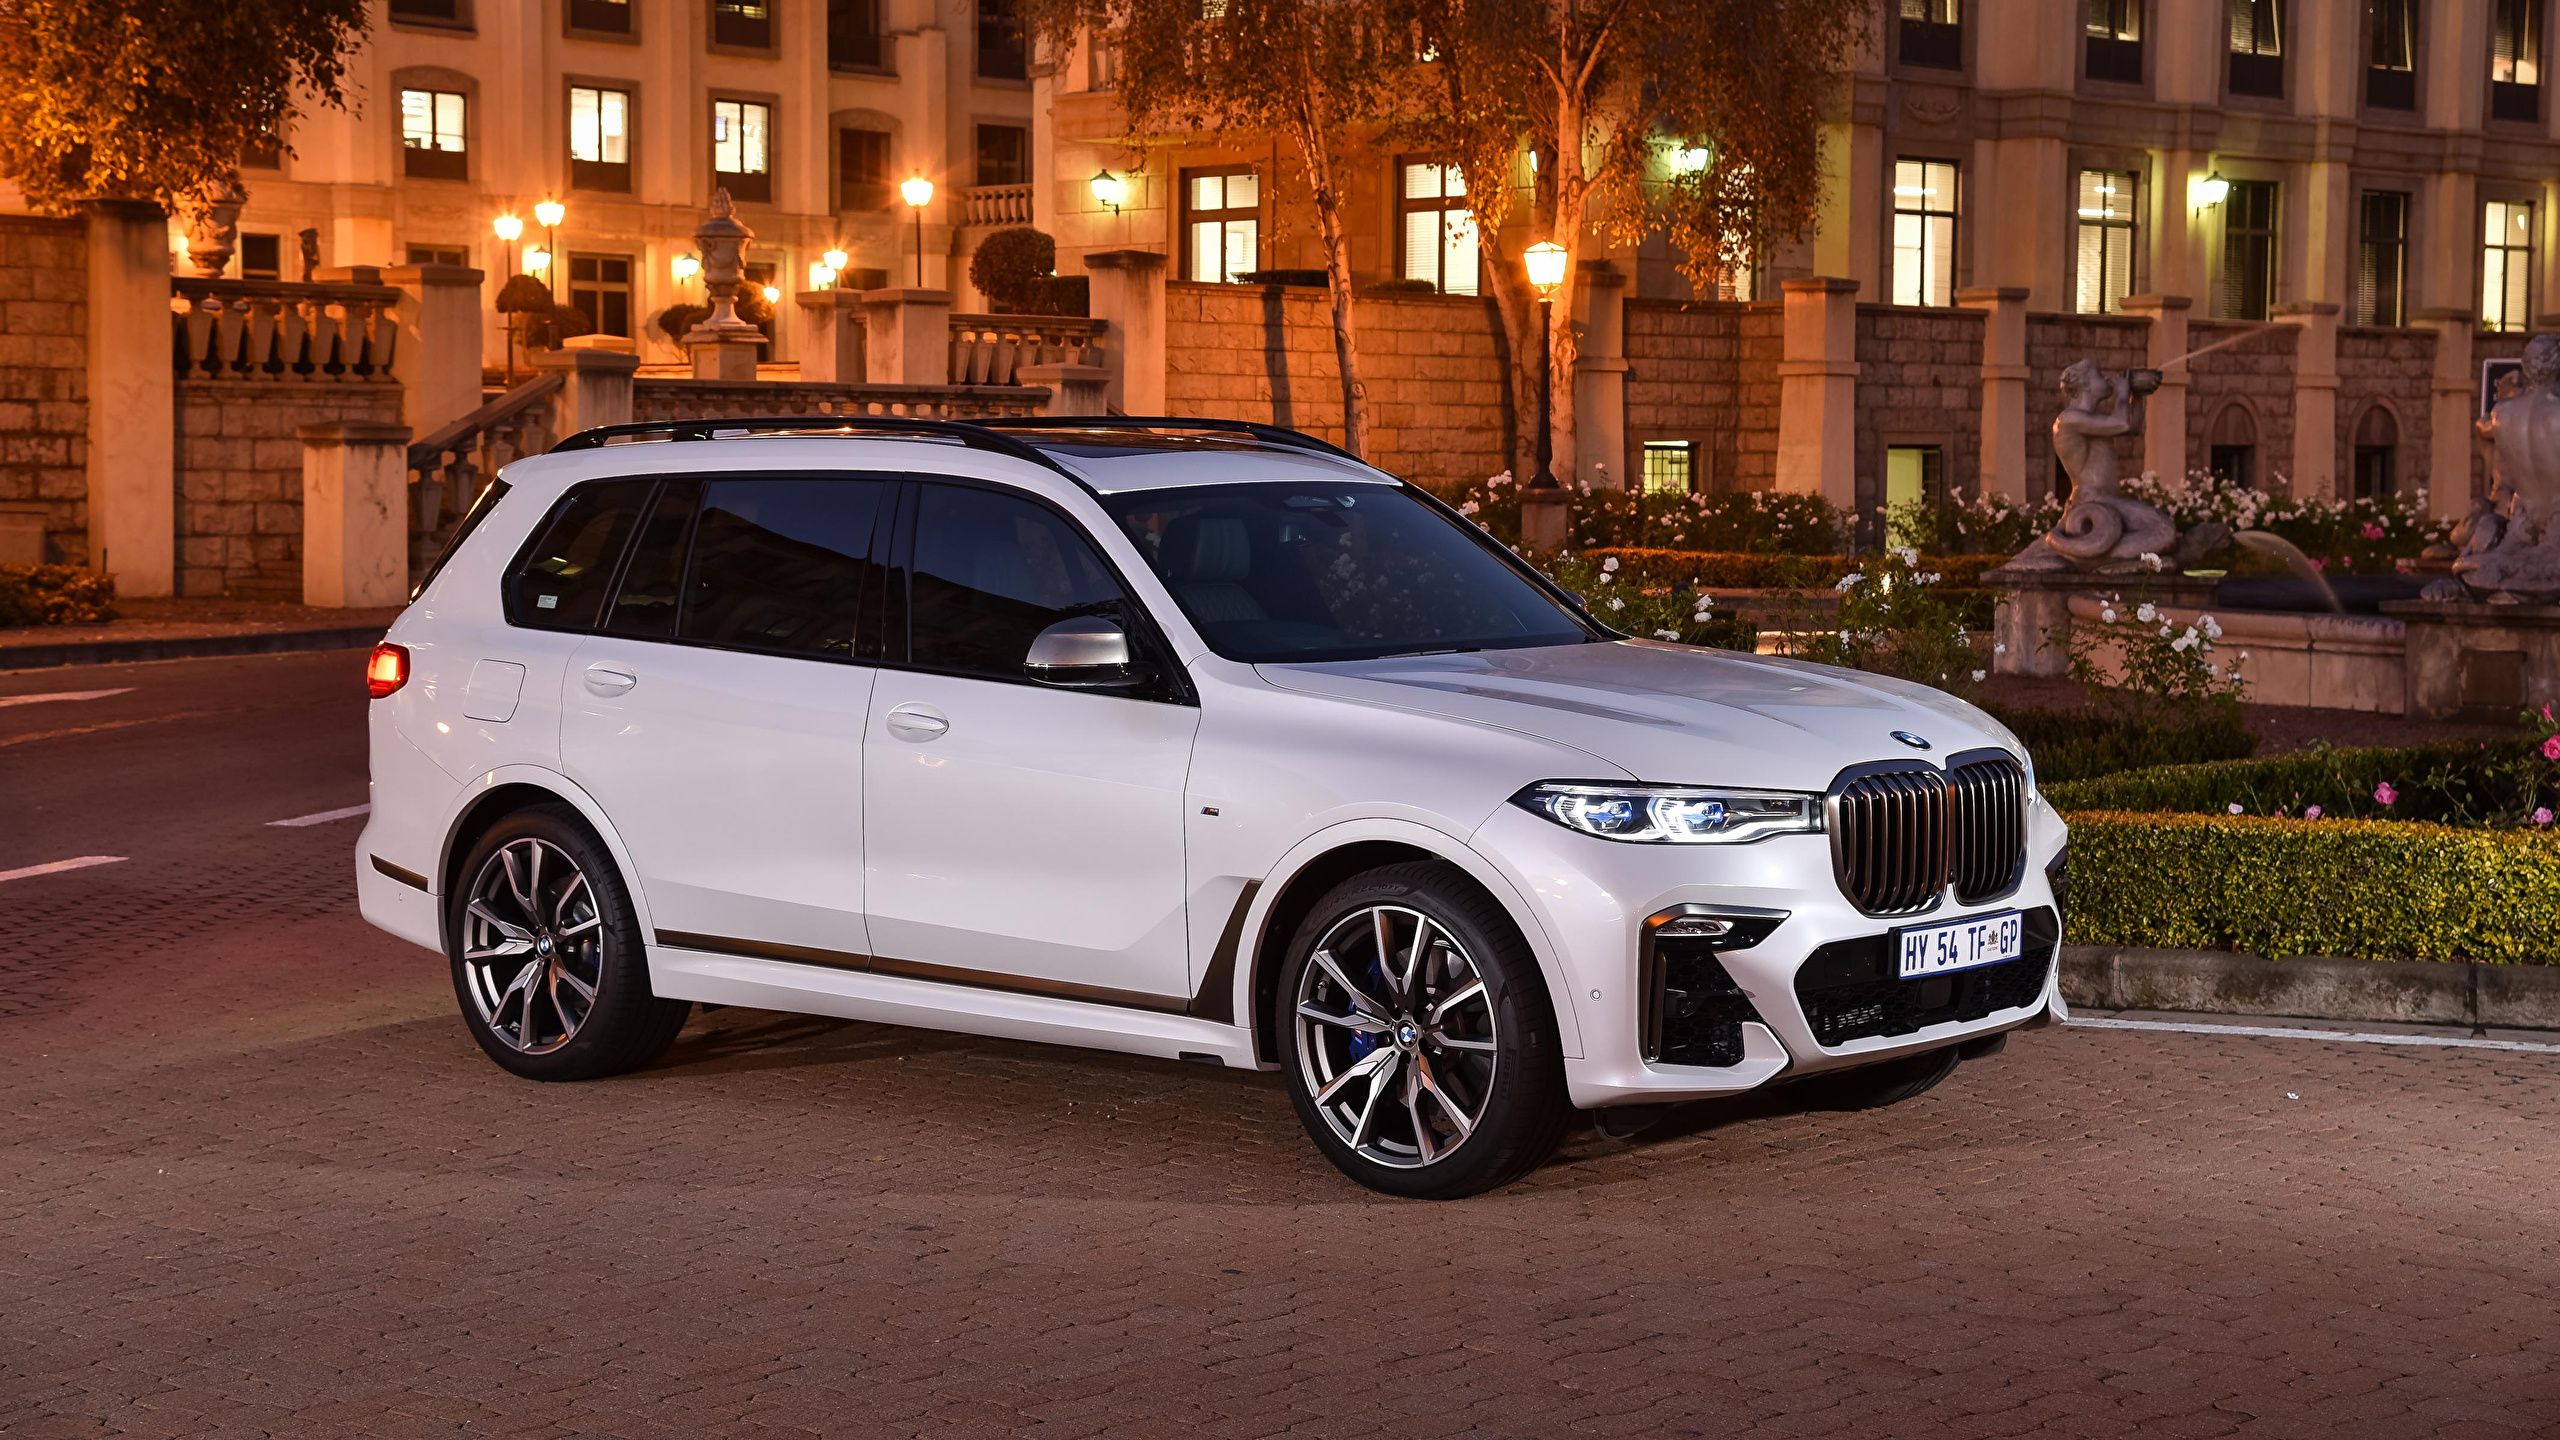 Picture BMW 2019 X7 M50d White Cars Metallic 2560x1440